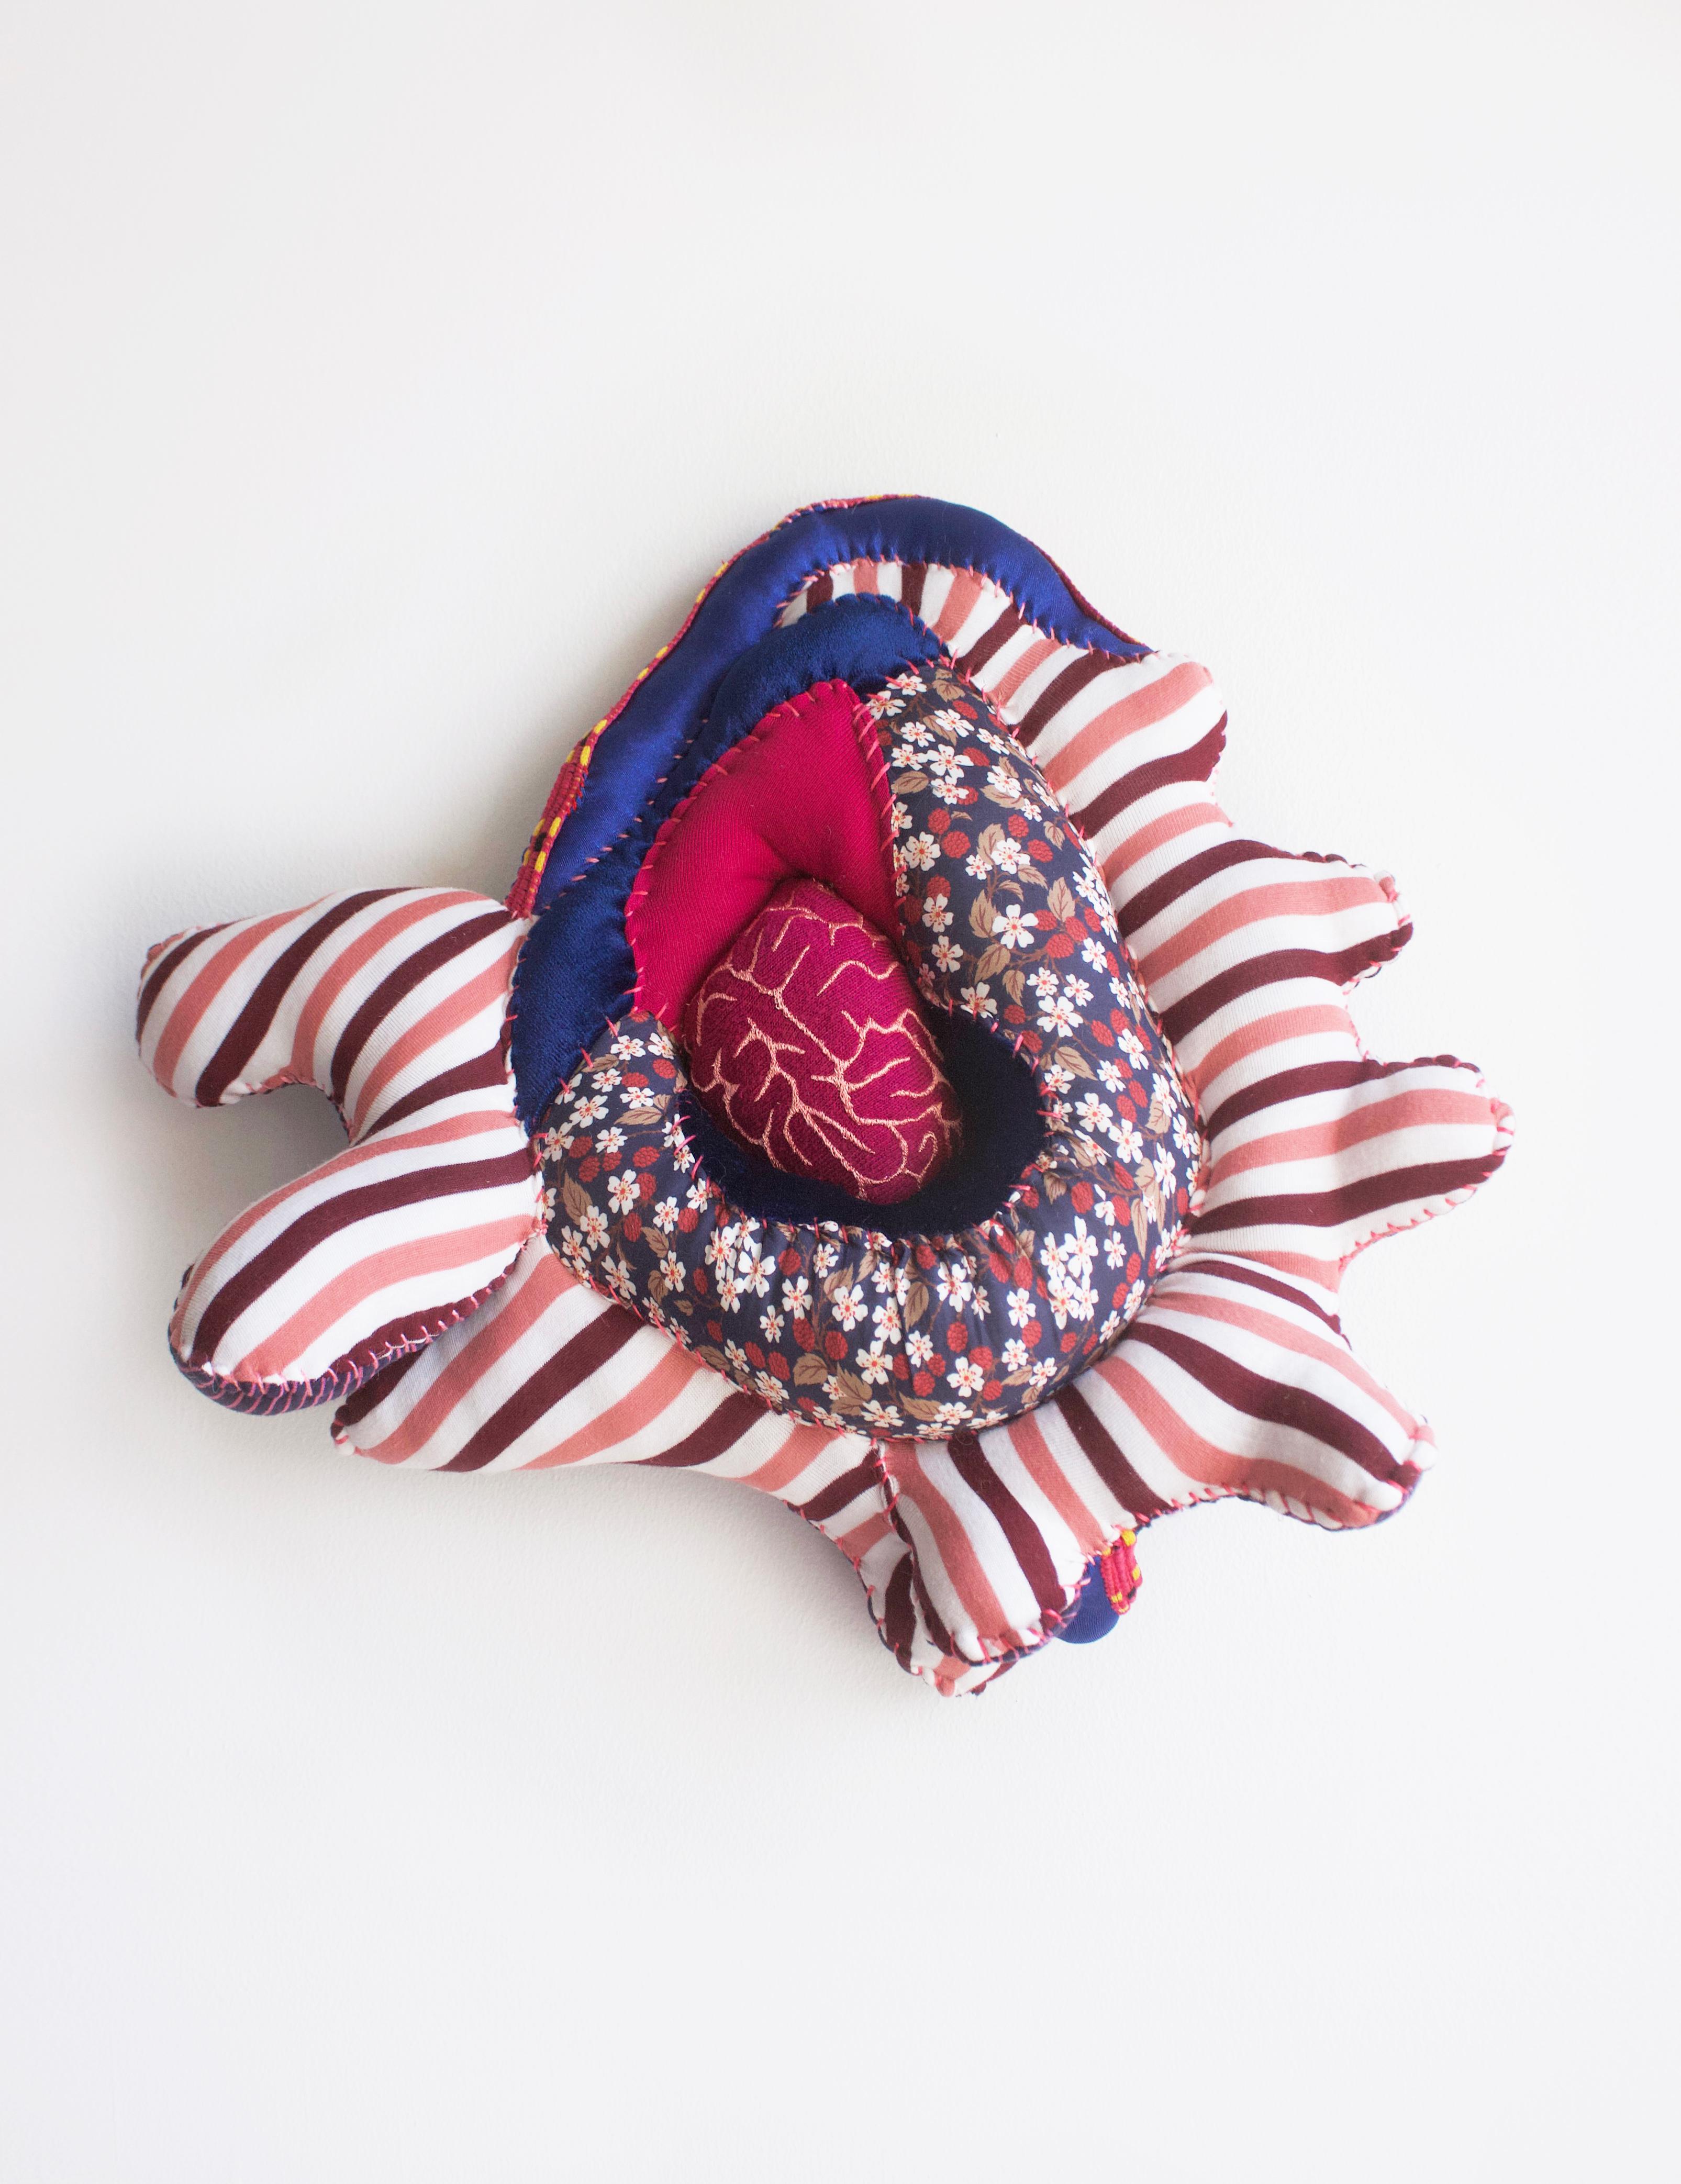 Hanna Washburn Abstract Sculpture - Soft Spot, textile, patterned, pink, red, blue, organic, soft sculpture